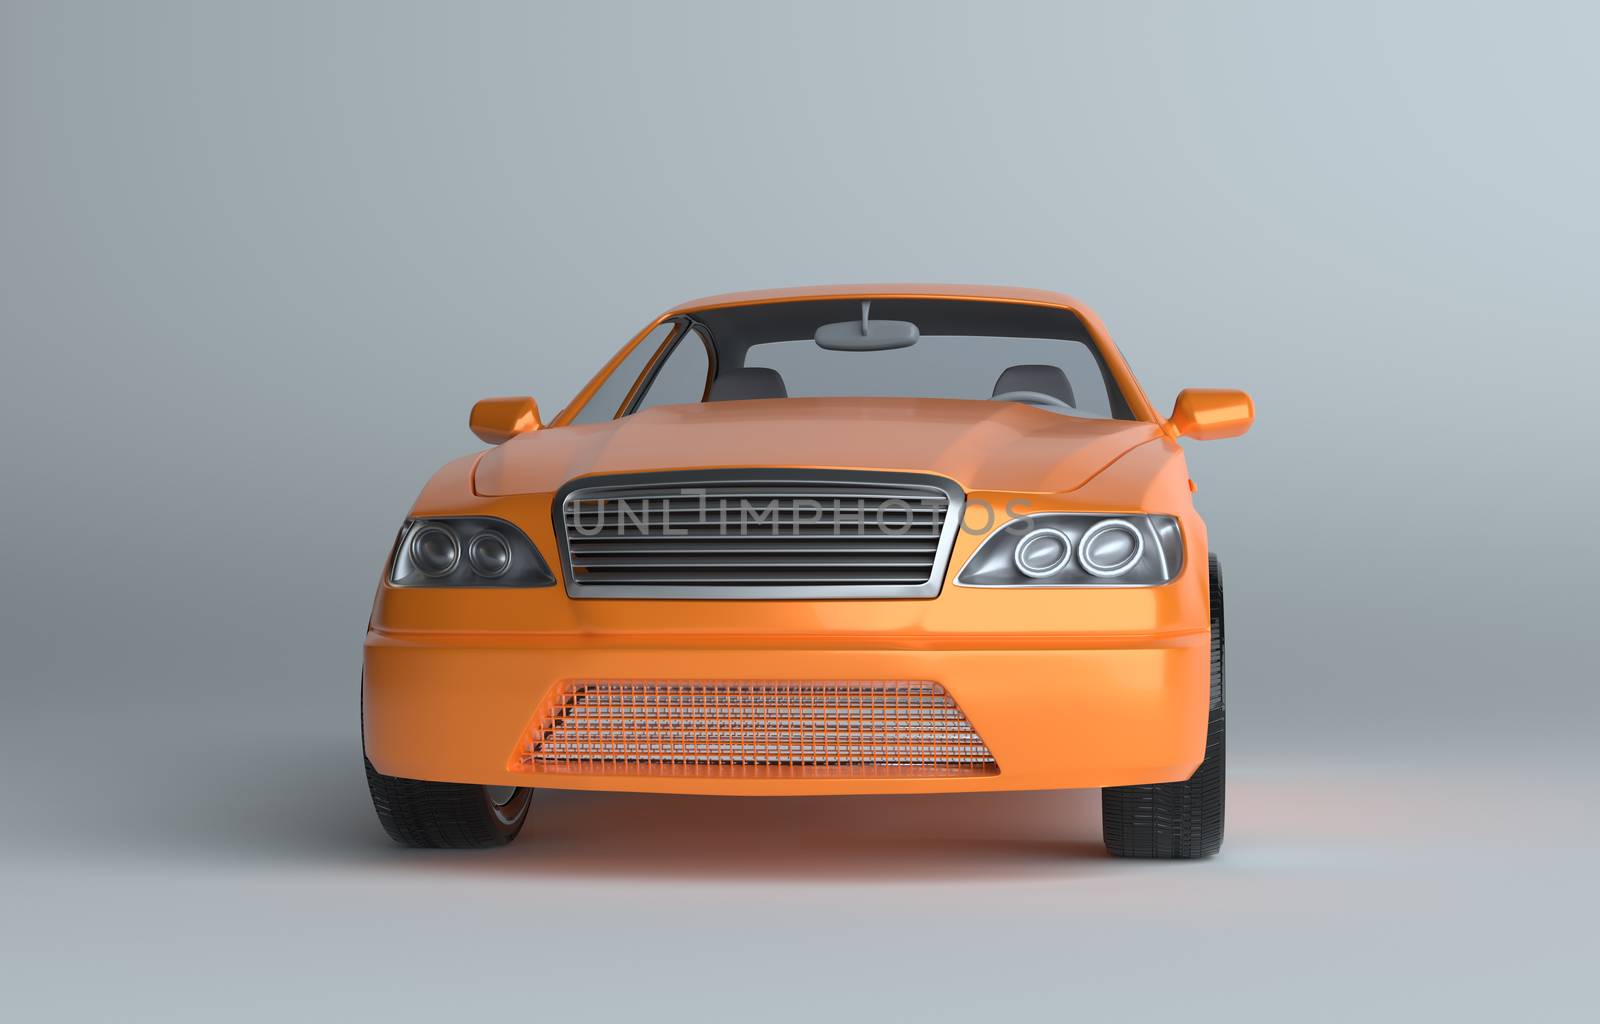 3d illustration of a luxury sports car, studio background